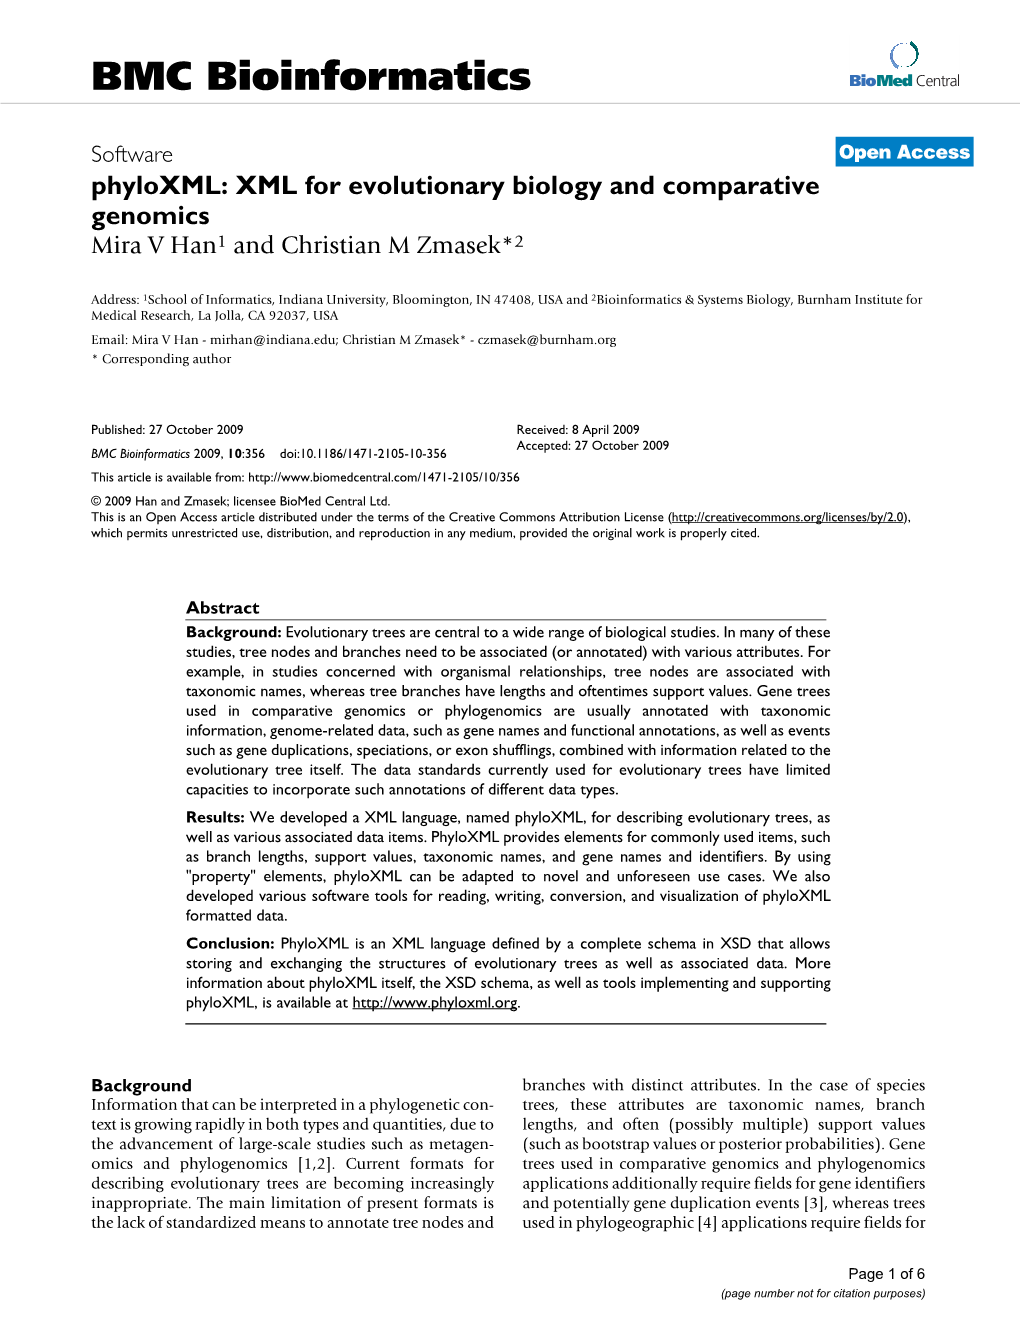 Phyloxml: XML for Evolutionary Biology and Comparative Genomics Mira V Han1 and Christian M Zmasek*2